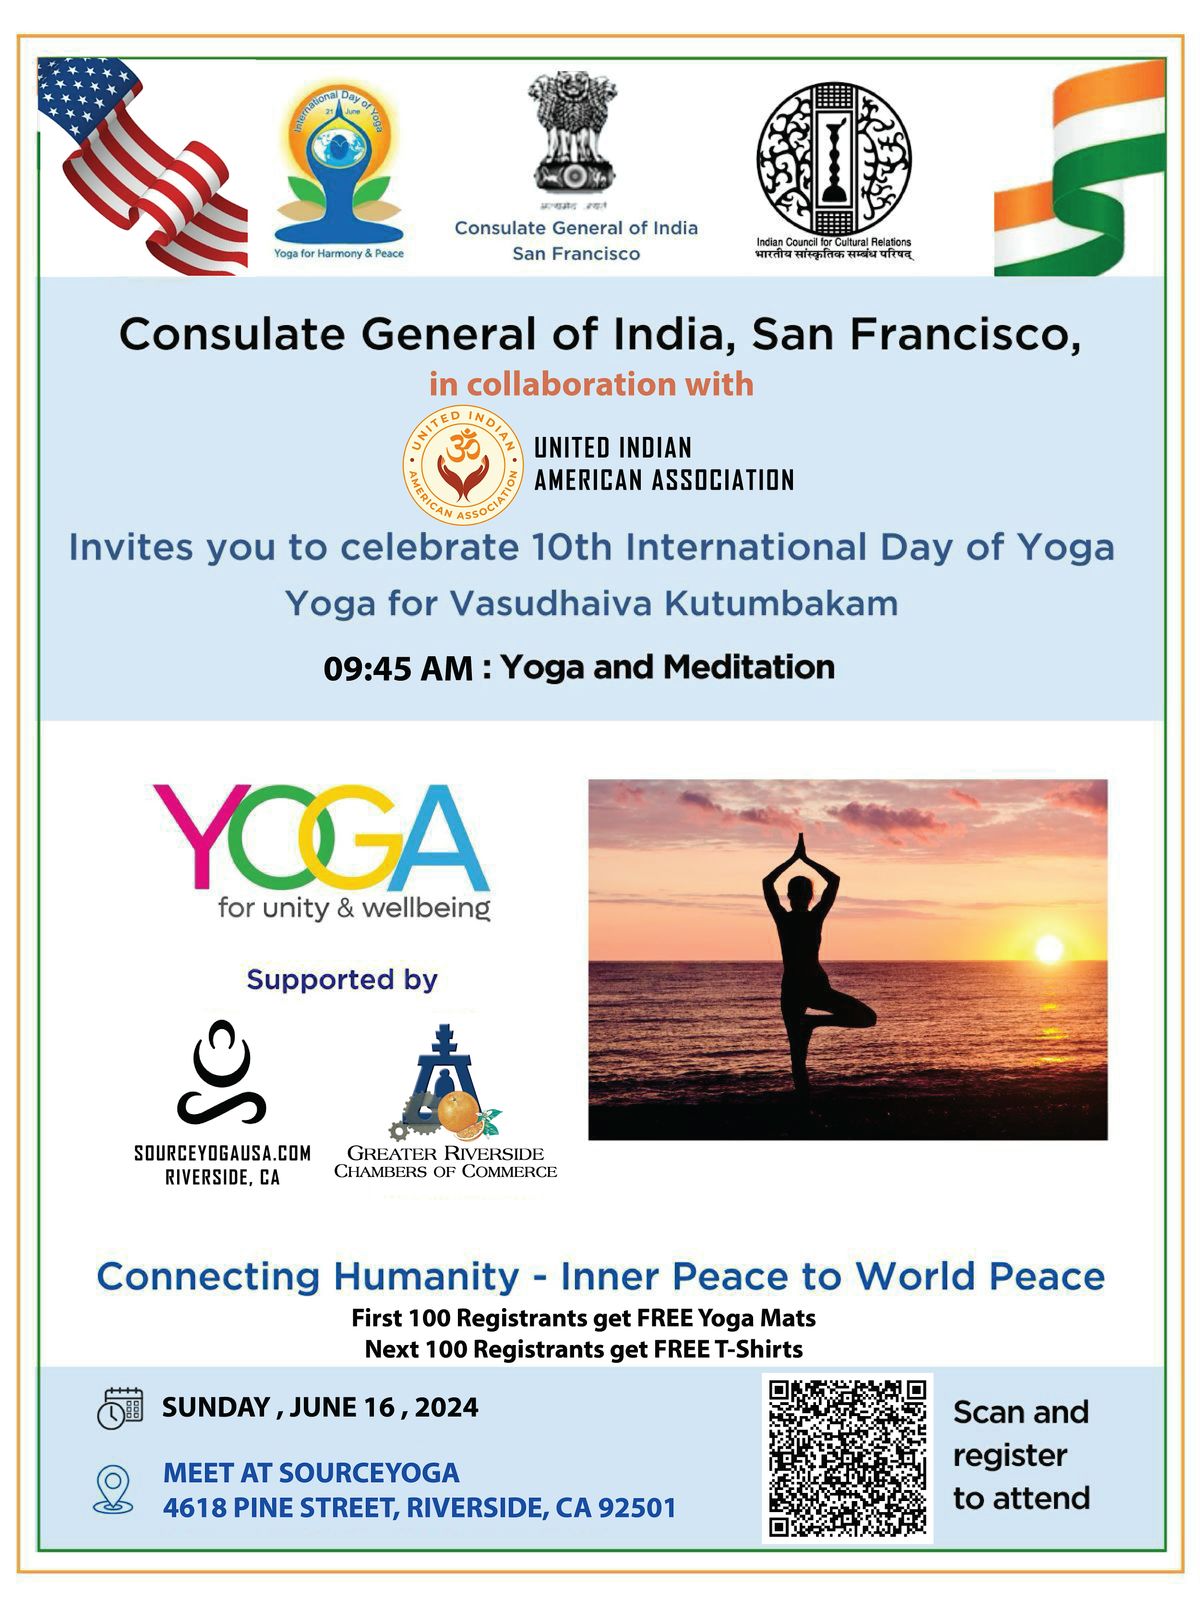 Celebrating 10th International Yoga Day with Free Yoga and Meditation